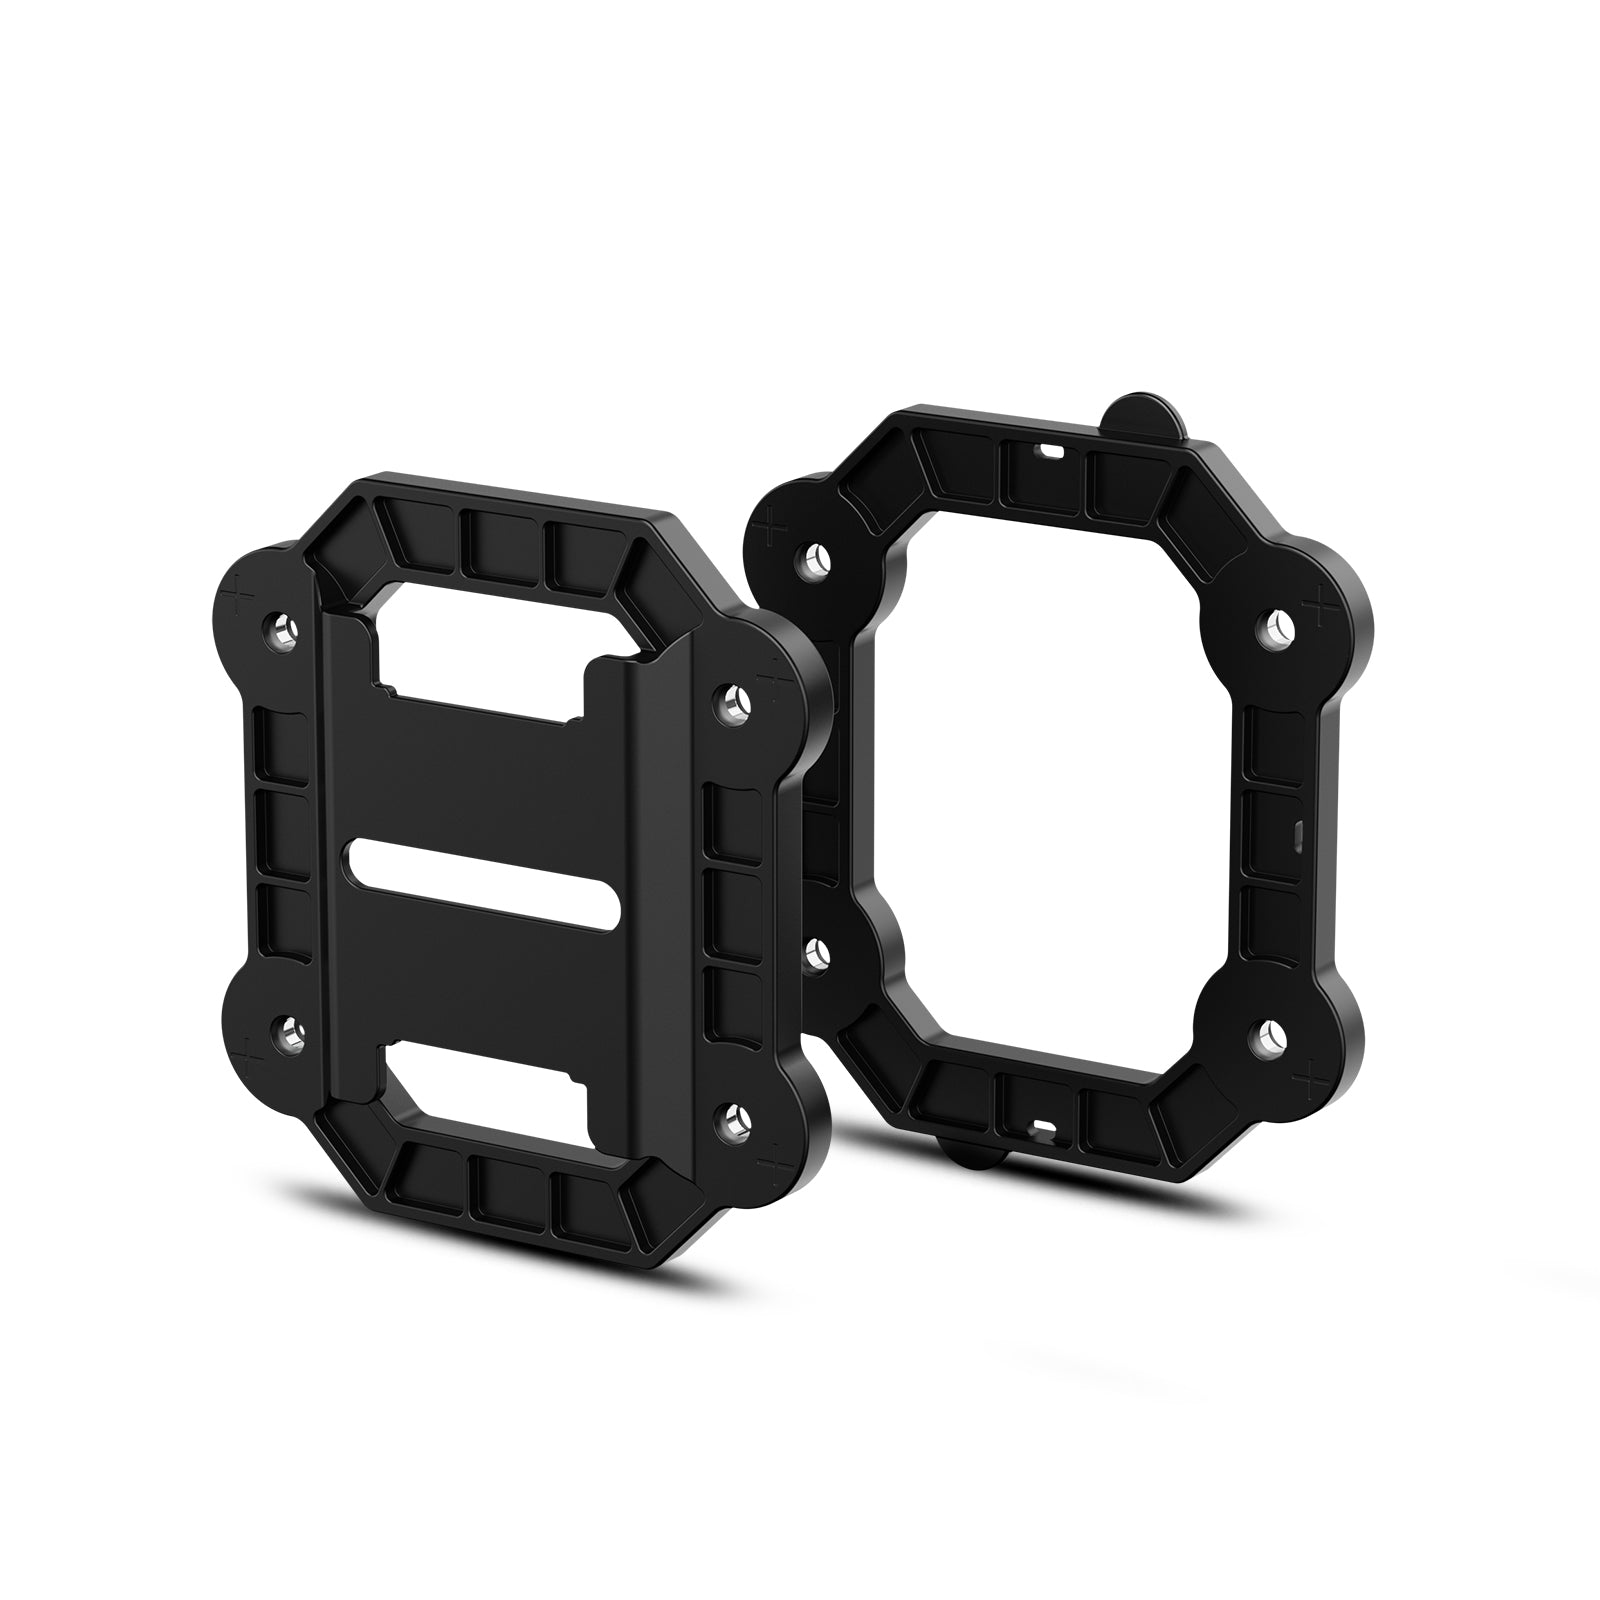 BOBLOV Body Camera Magnet Mounts, New Type Portable Black Silica Clips1